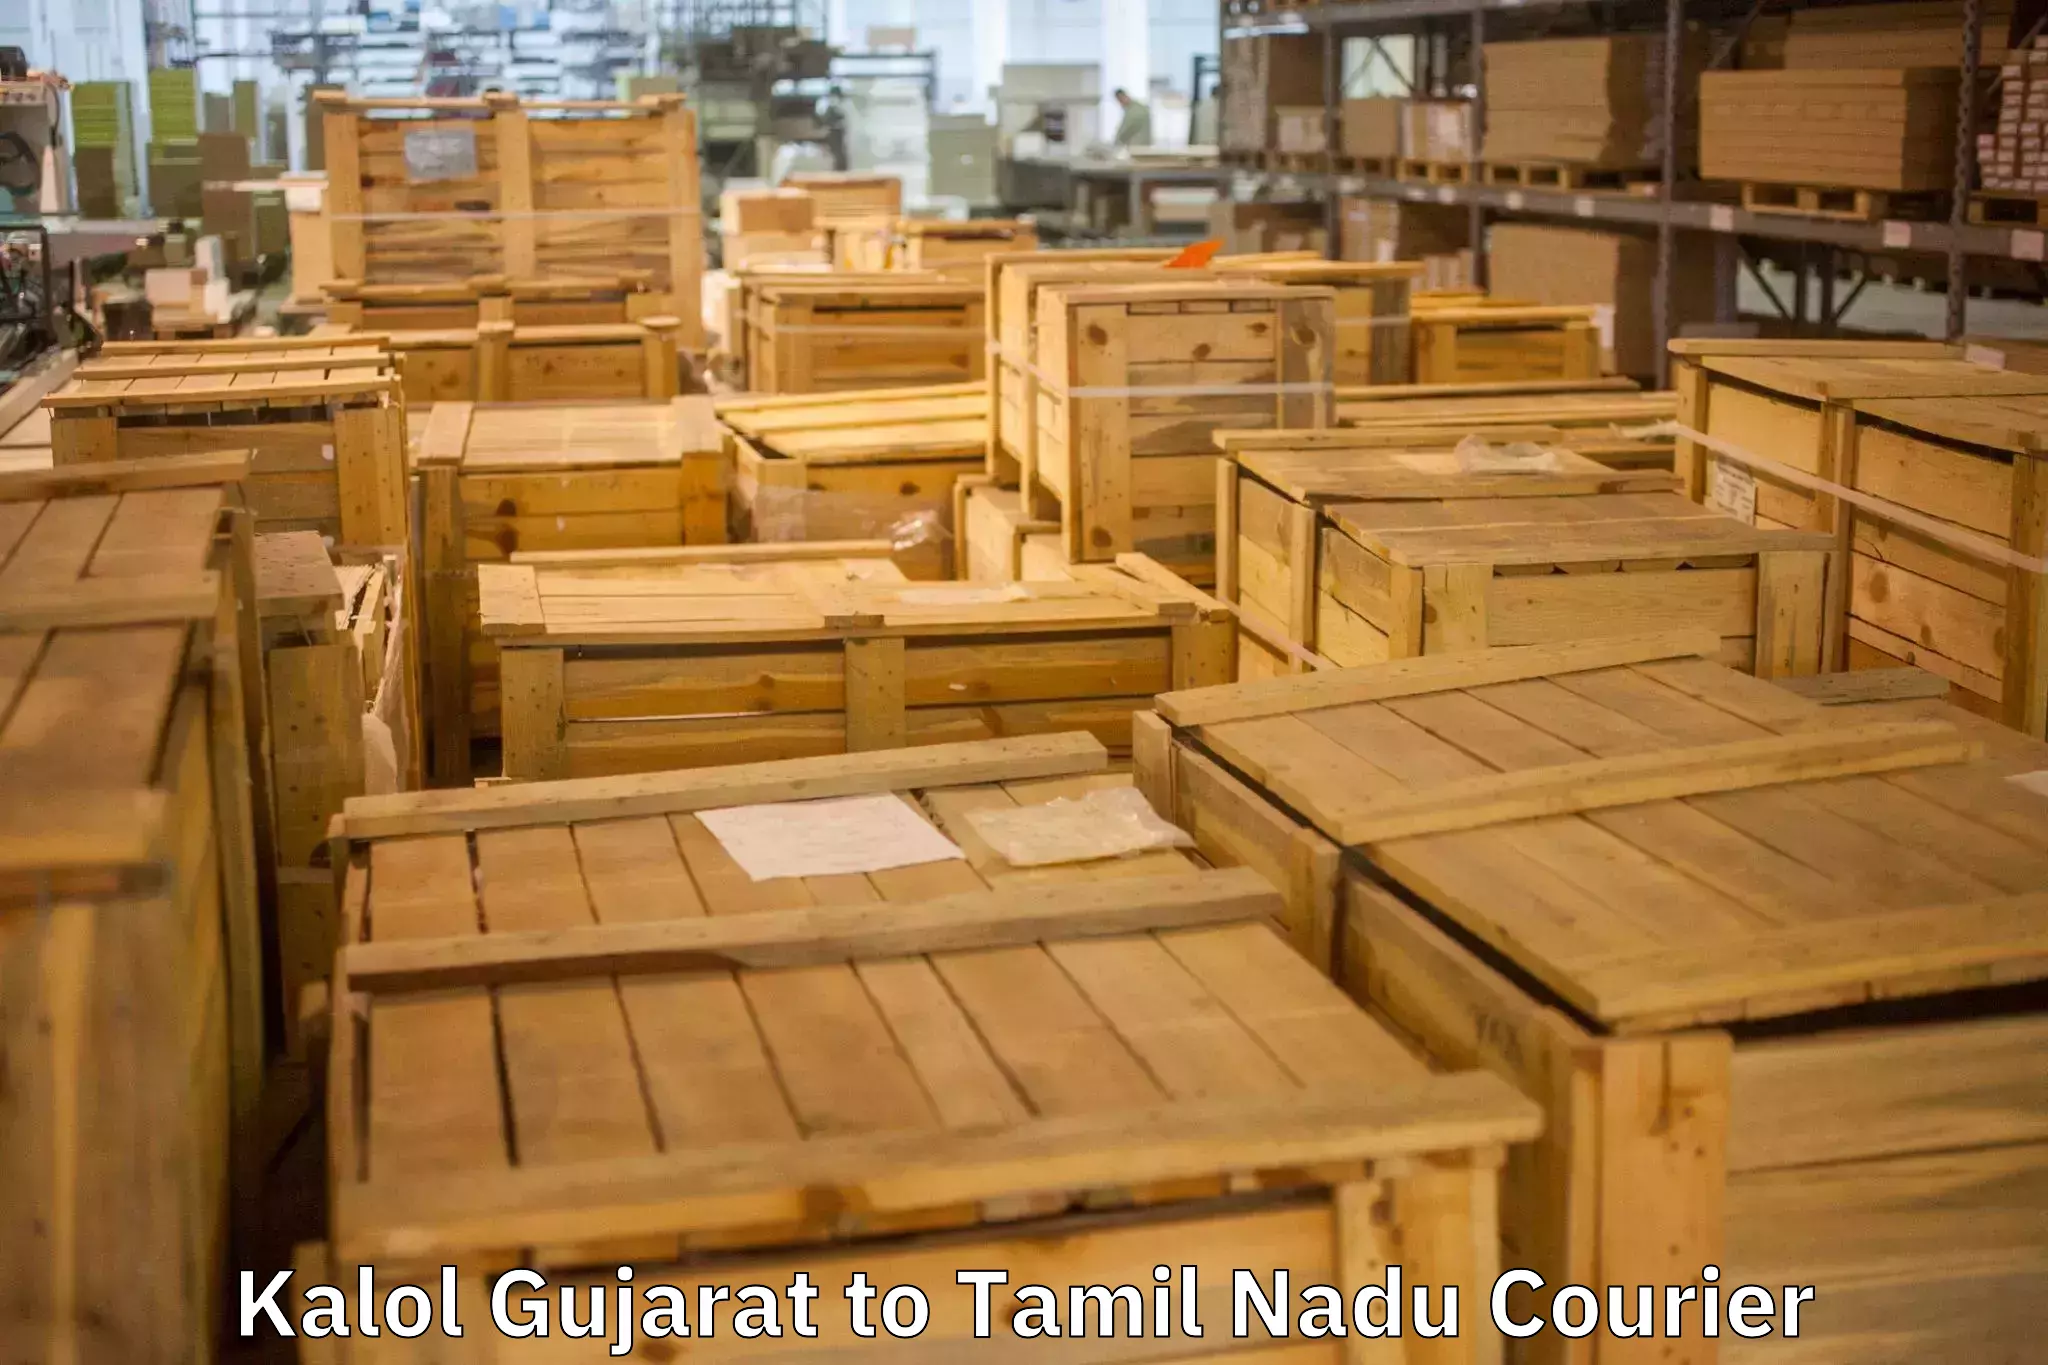 Dependable moving services Kalol Gujarat to Ennore Port Chennai